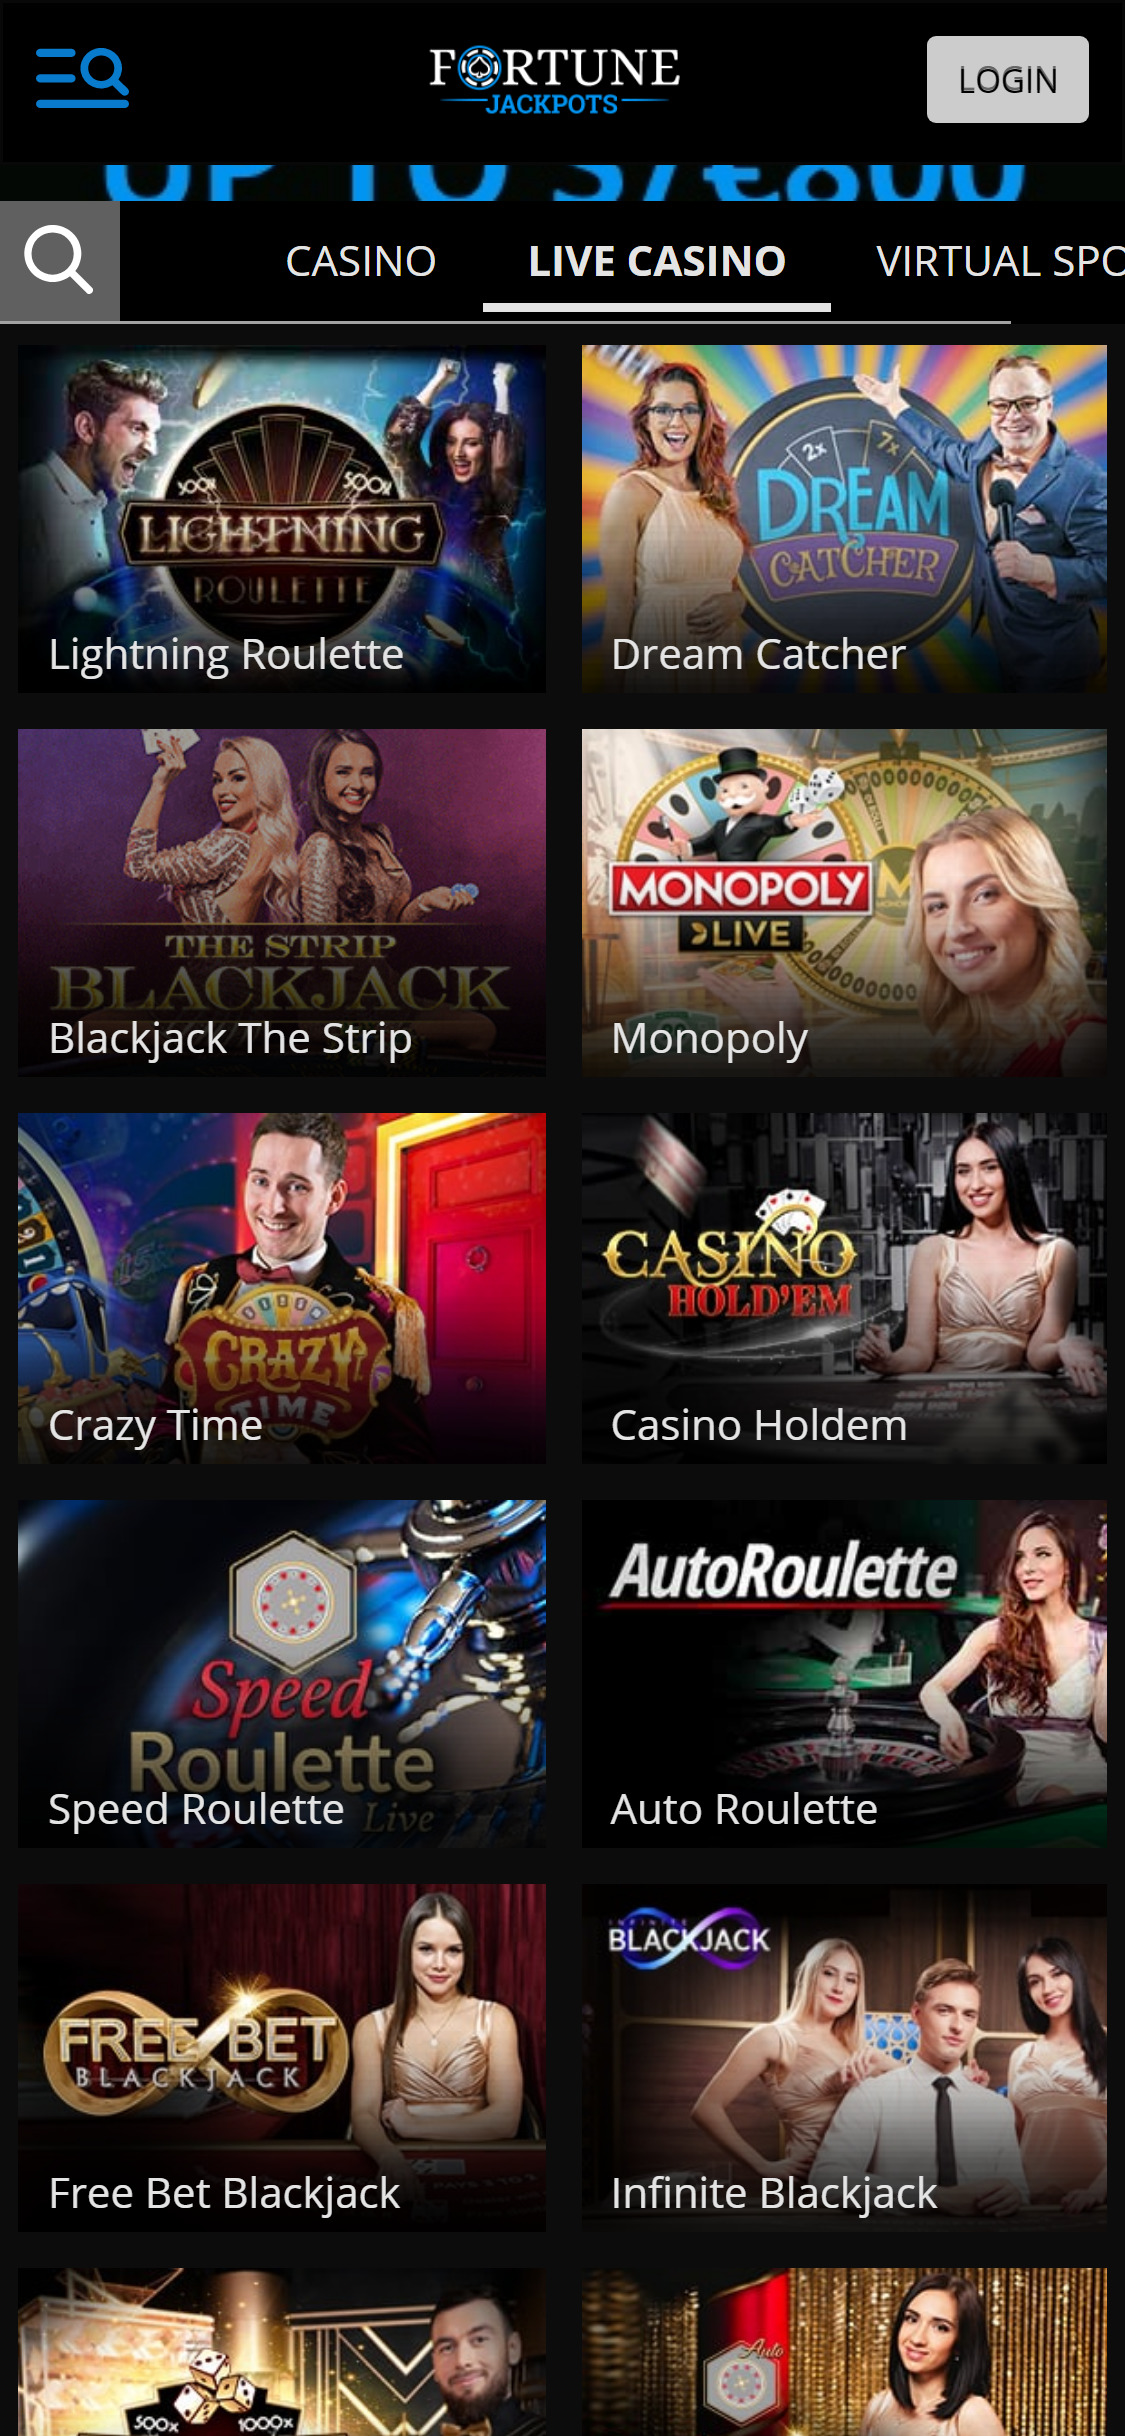 Fortune Jackpots Casino Mobile Live Dealer Games Review